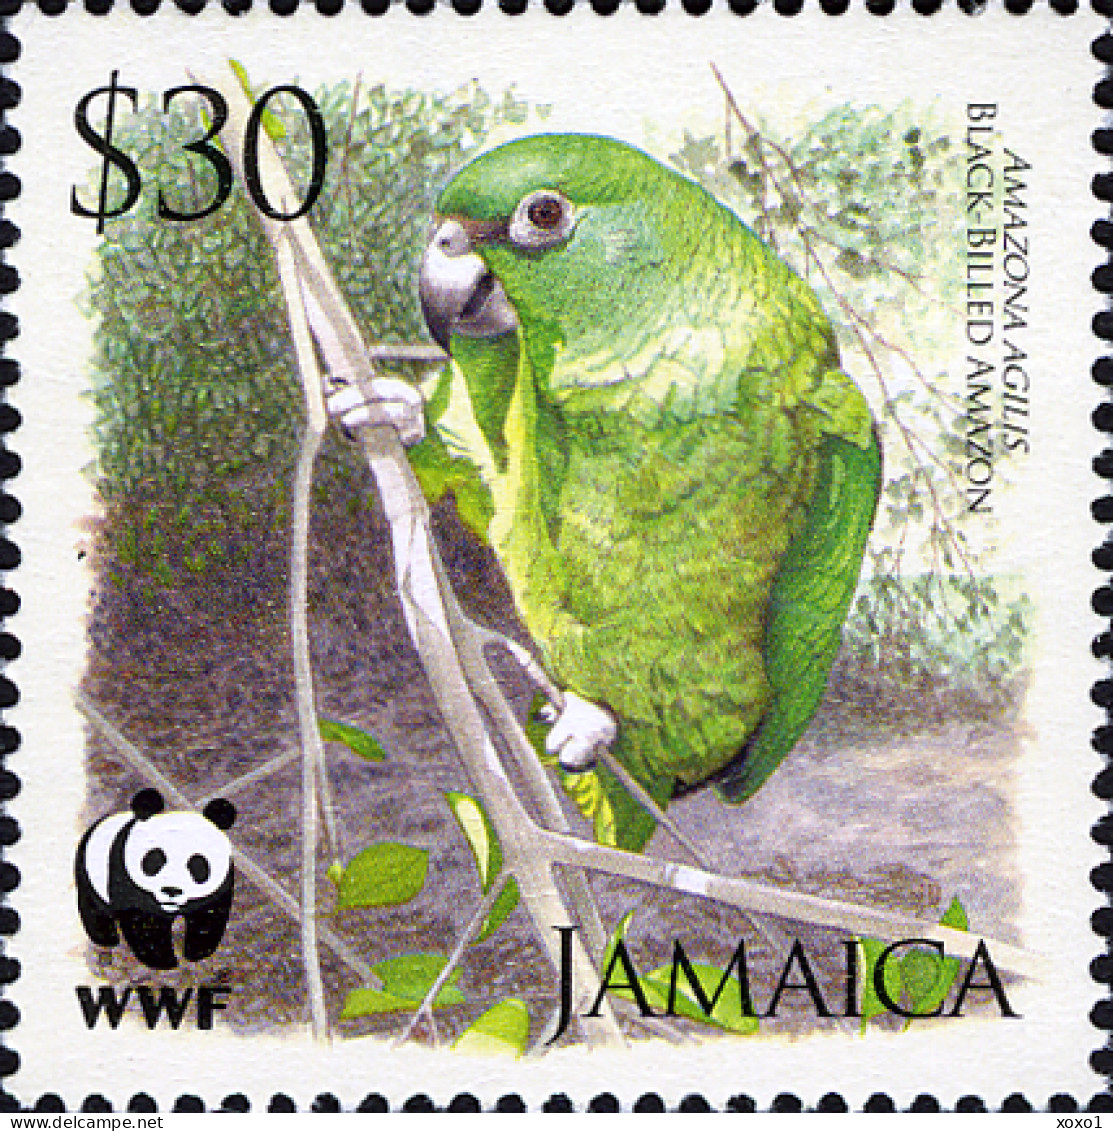 Jamaica 2006 MiNr. 1122 - 1125 Jamaika WWF Birds, Parrots, Black-billed Amazon 4v MNH** 3.20 € - Pappagalli & Tropicali